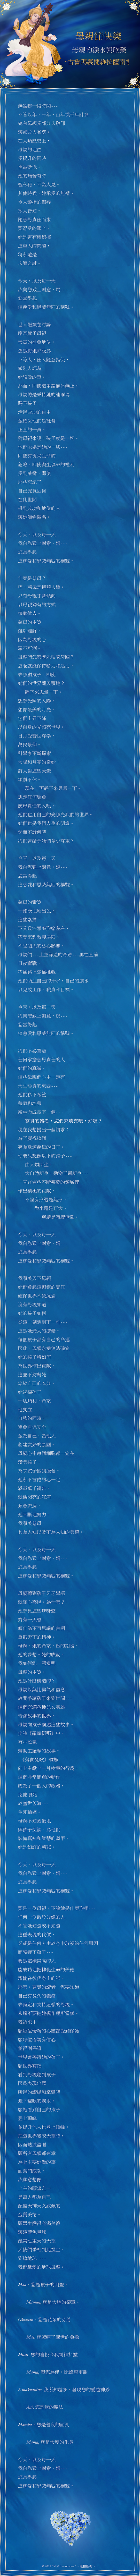 Chinese Poem